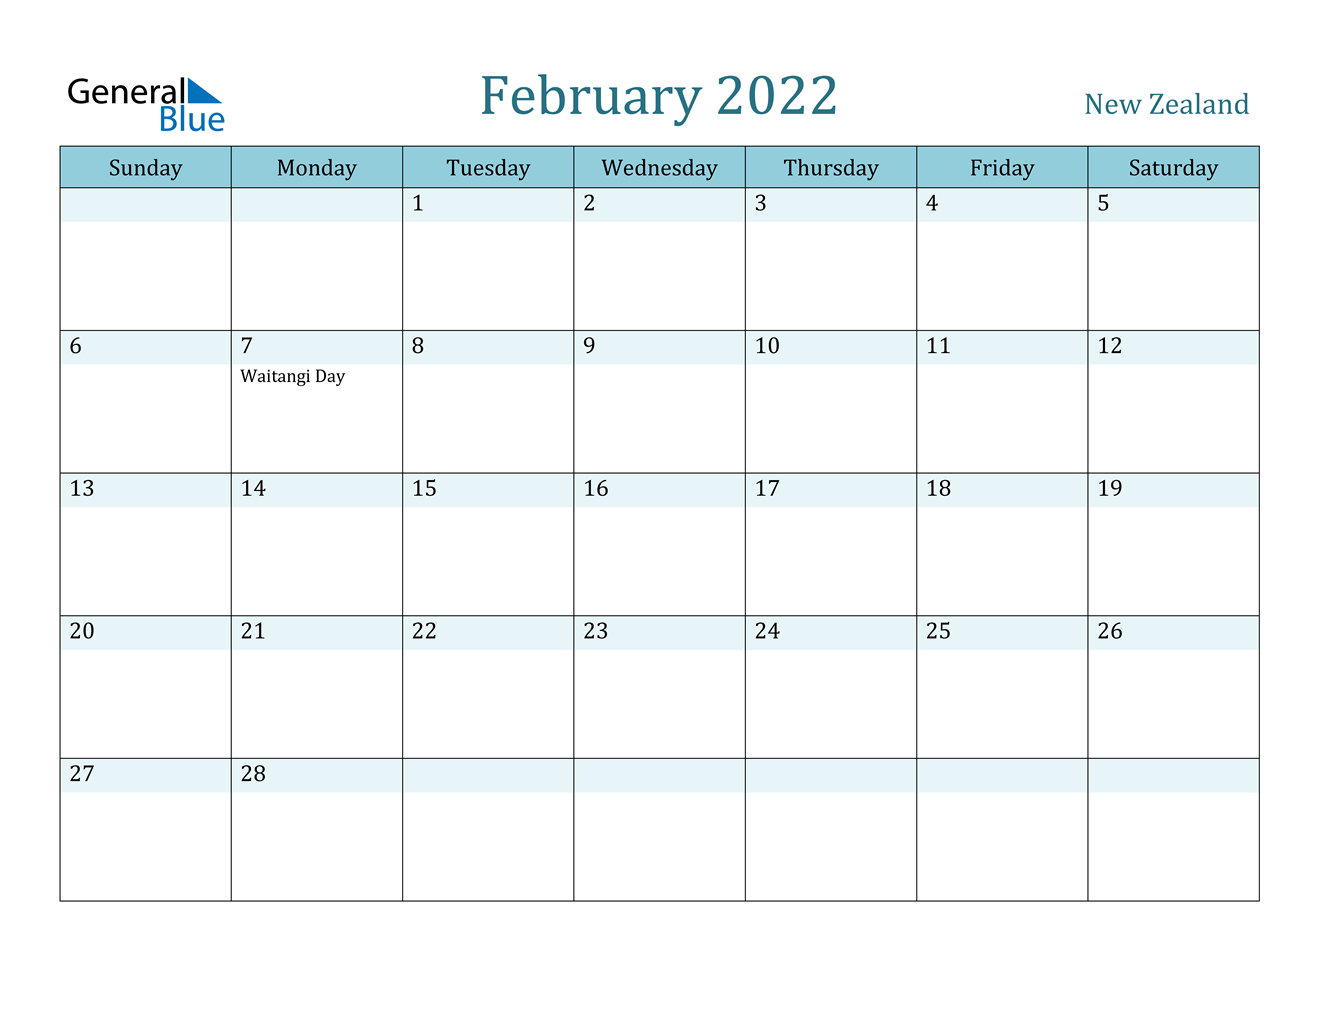 February 2022 Calendar - New Zealand